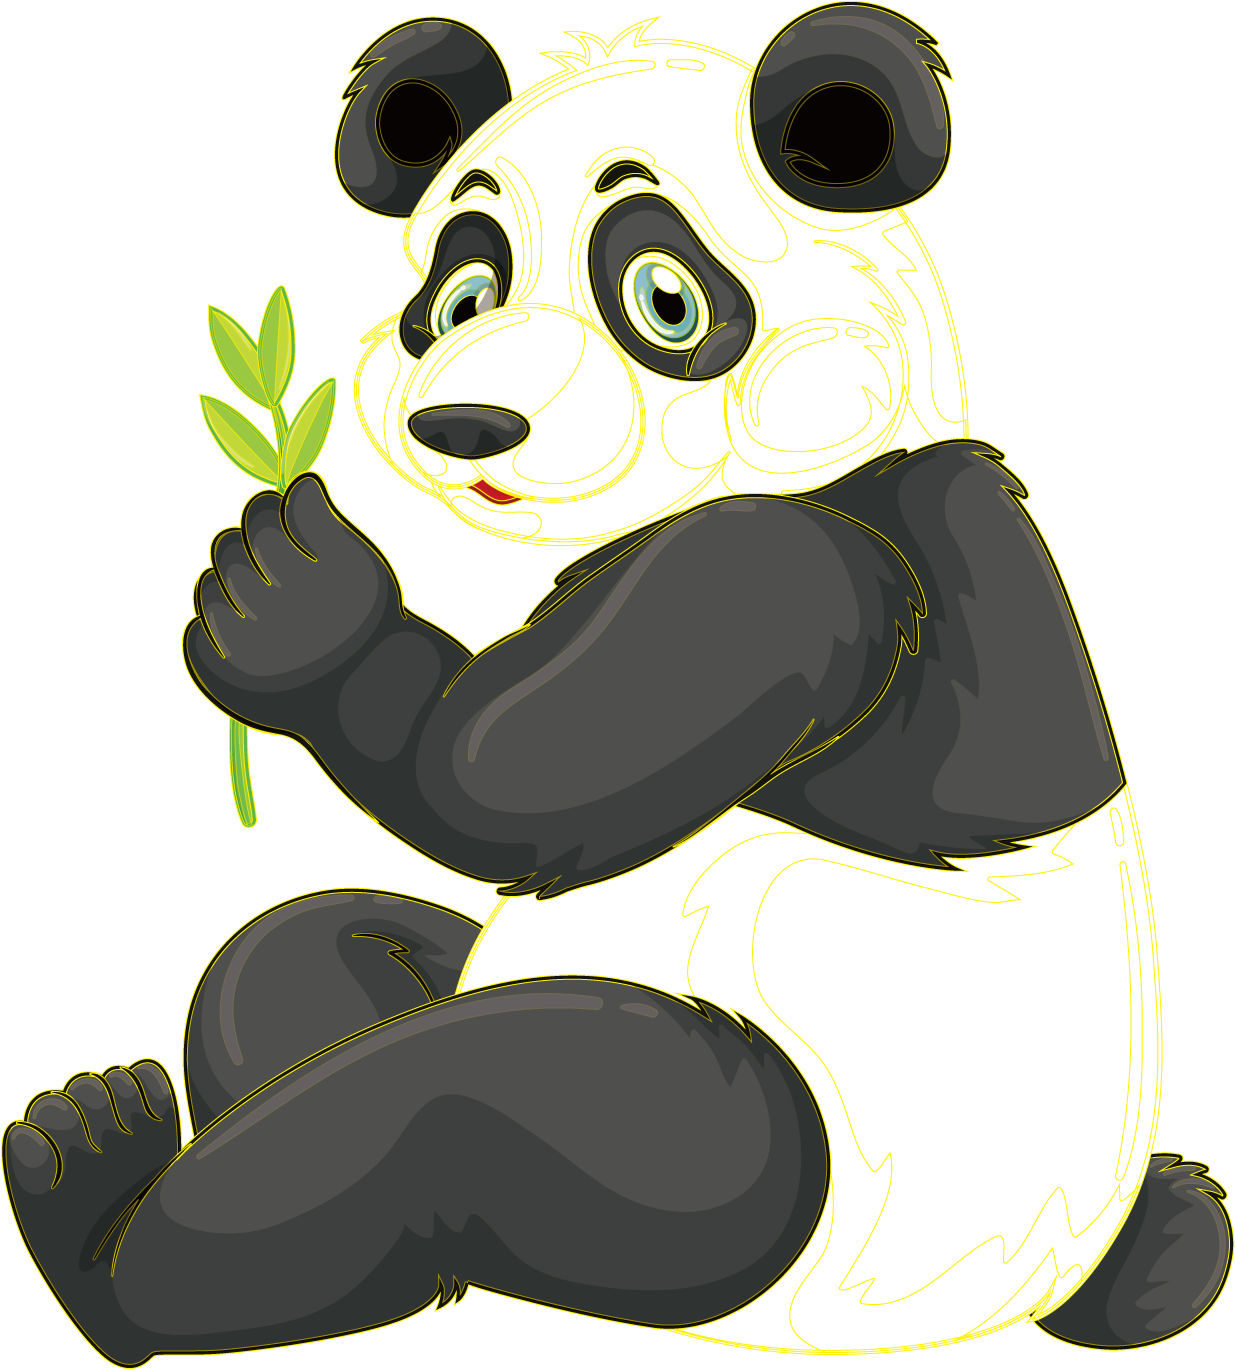 Giant Panda Red Panda Bamboo Illustration - Giant Panda Red Panda Bamboo Illustration (1800x1800)